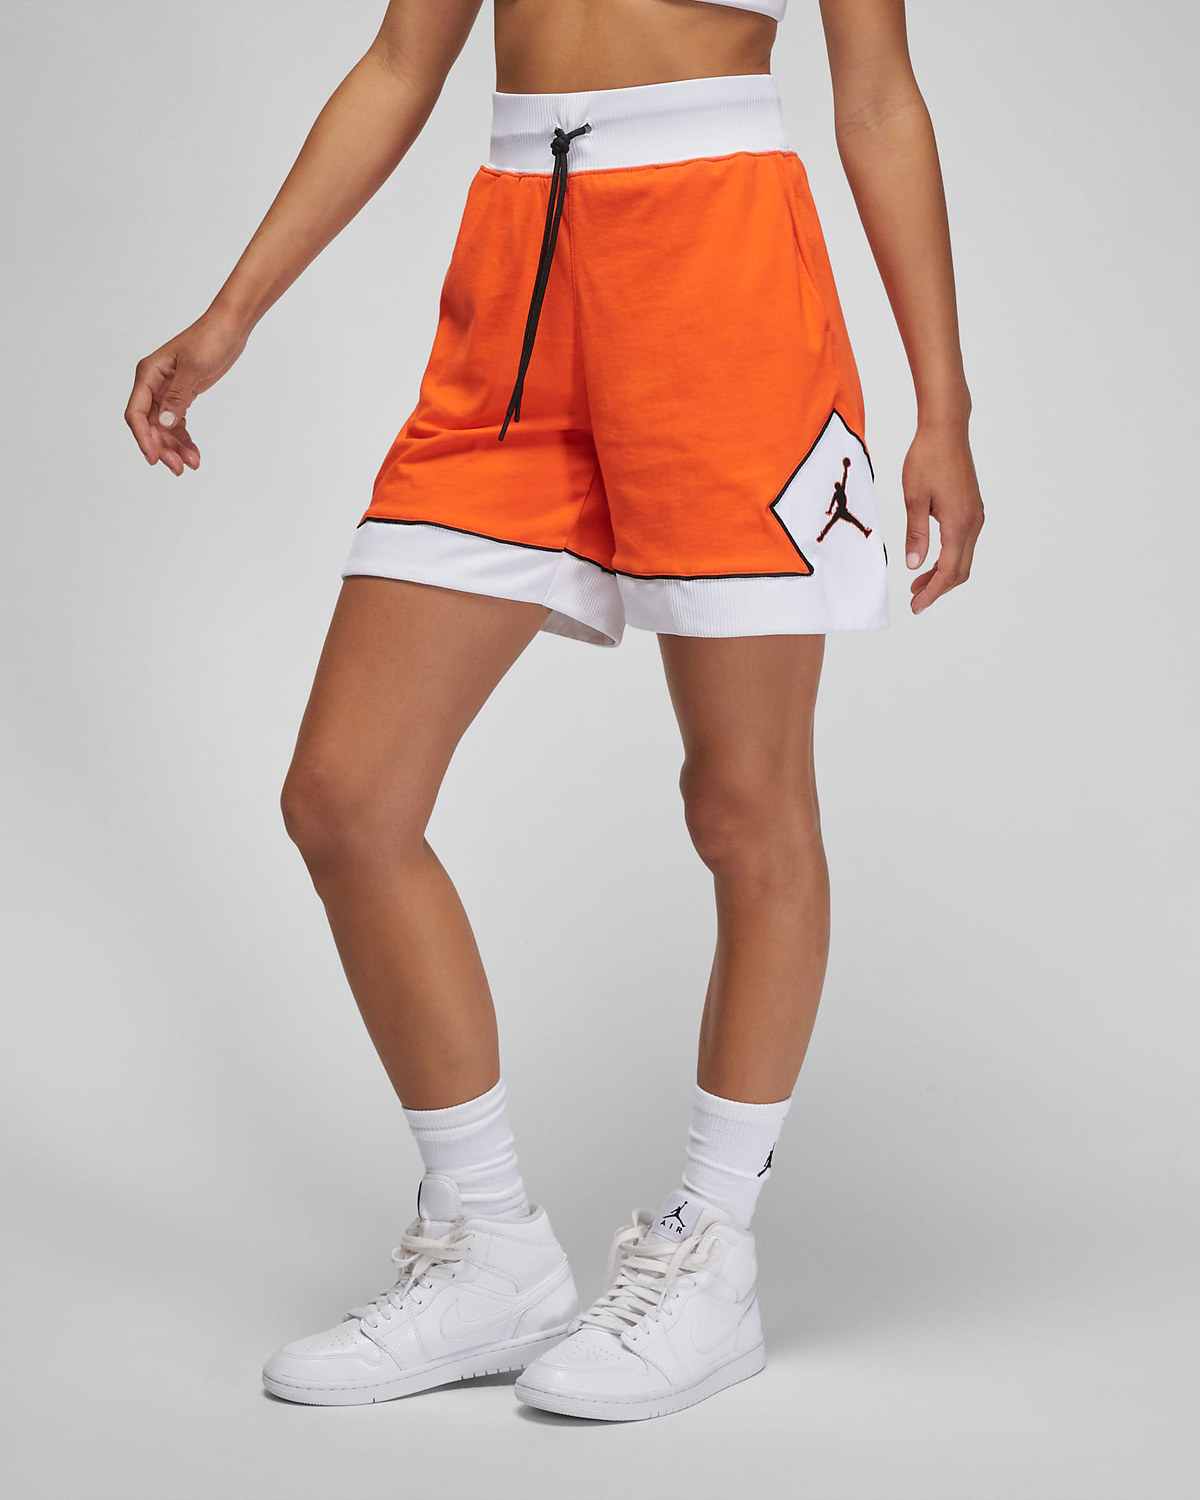 Jordan-Womens-Diamond-Shorts-Brilliant-Orange-1